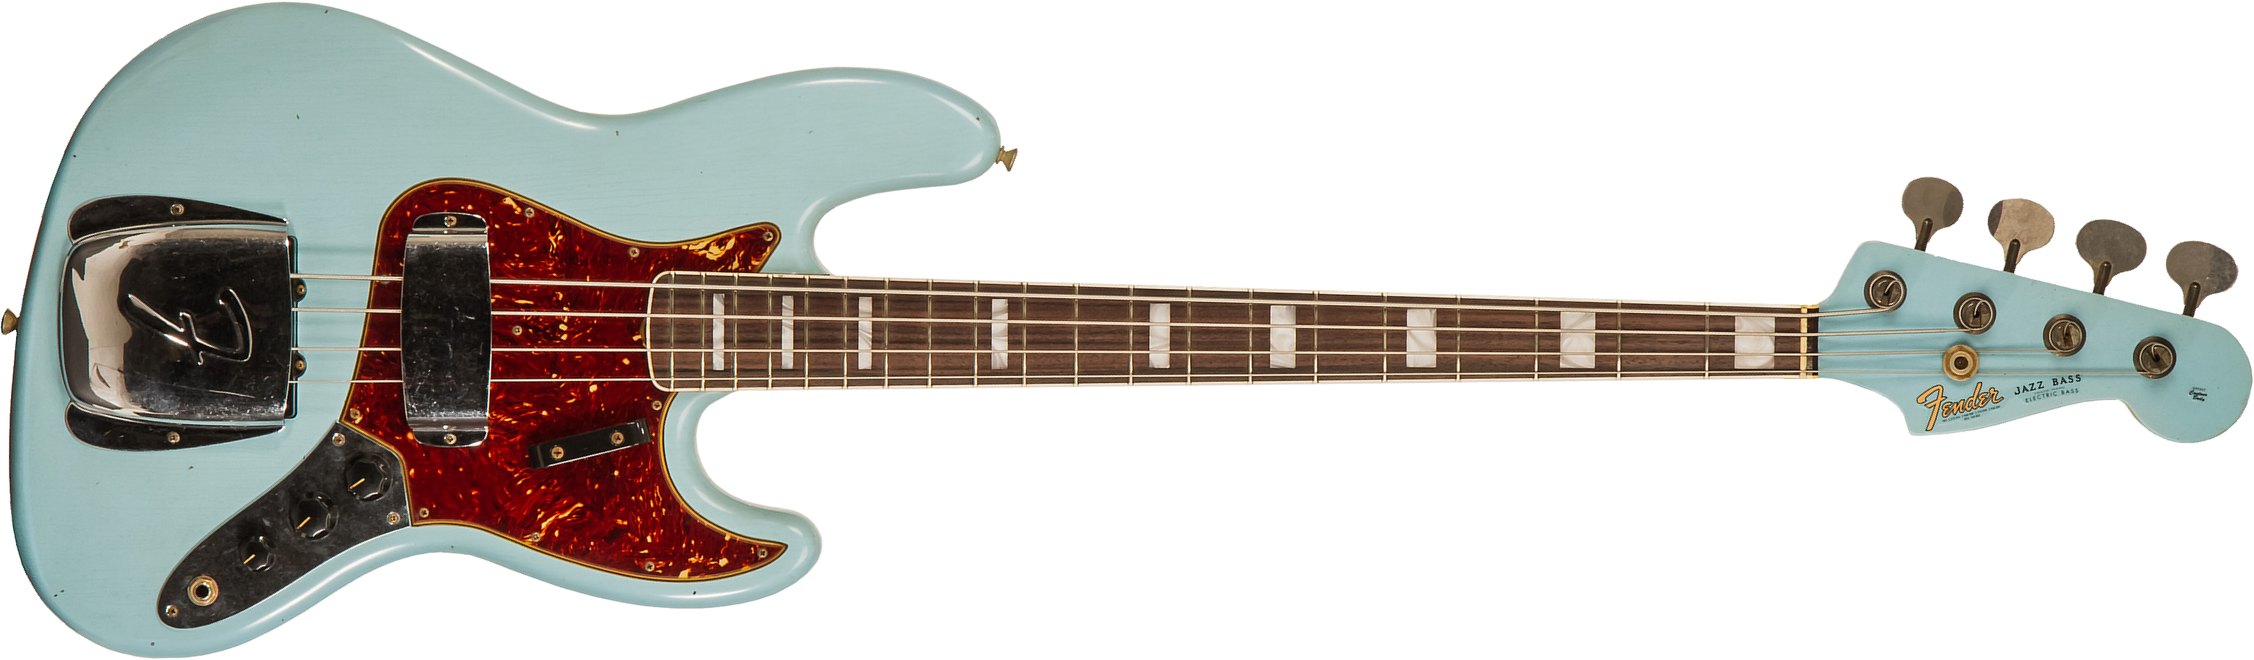 Fender Custom Shop Jazz Bass 1966 Rw #cz553892 - Journeyman Relic Daphne Blue - Solid body elektrische bas - Main picture